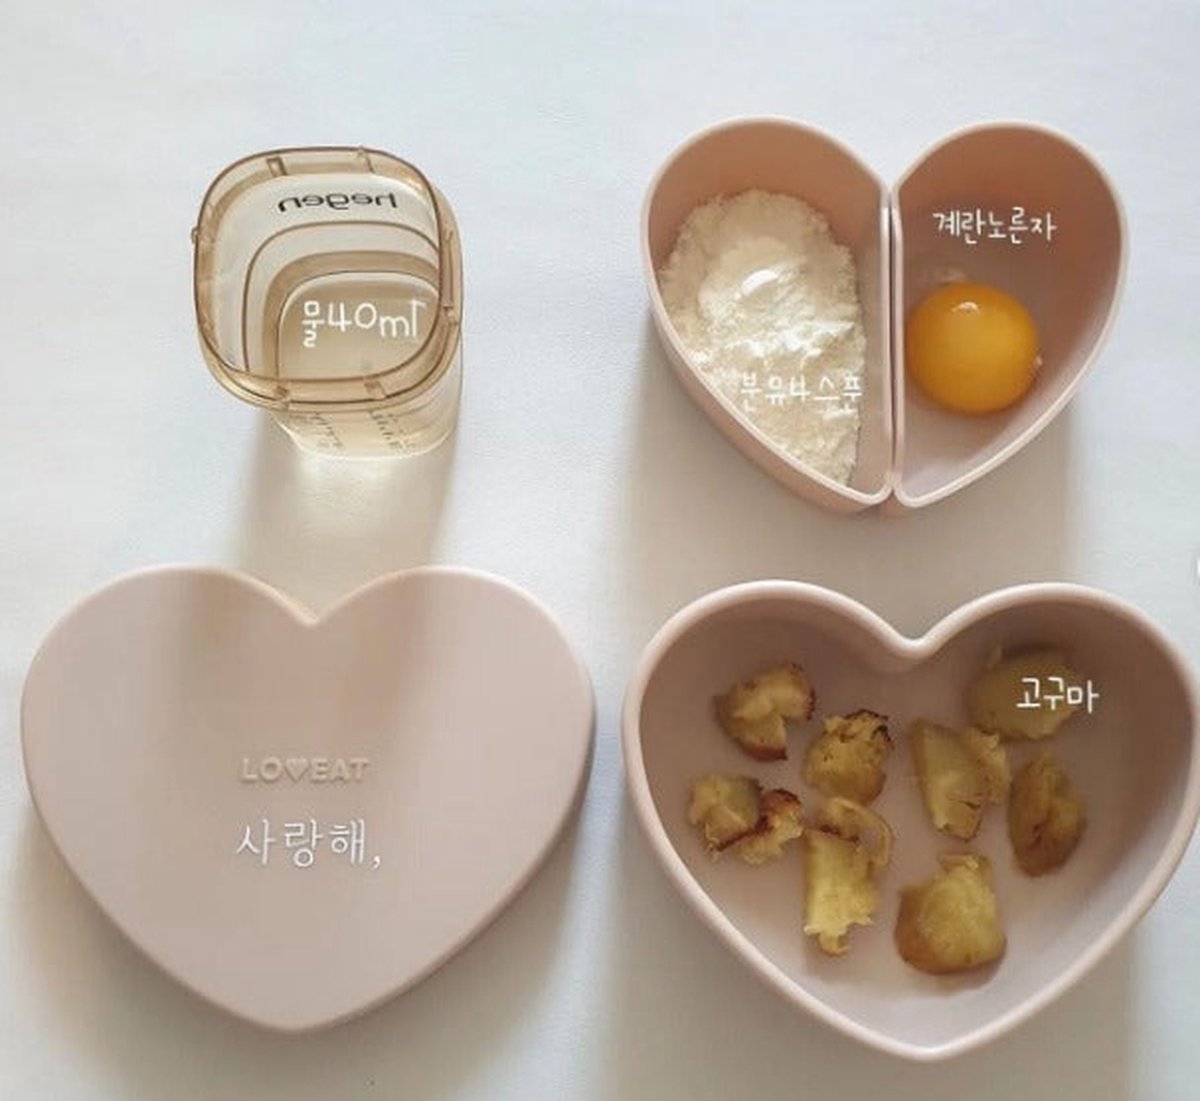 Loveat Heart Silicon Lunch Box 450ml Loveat Almondmilk [Korean Products]